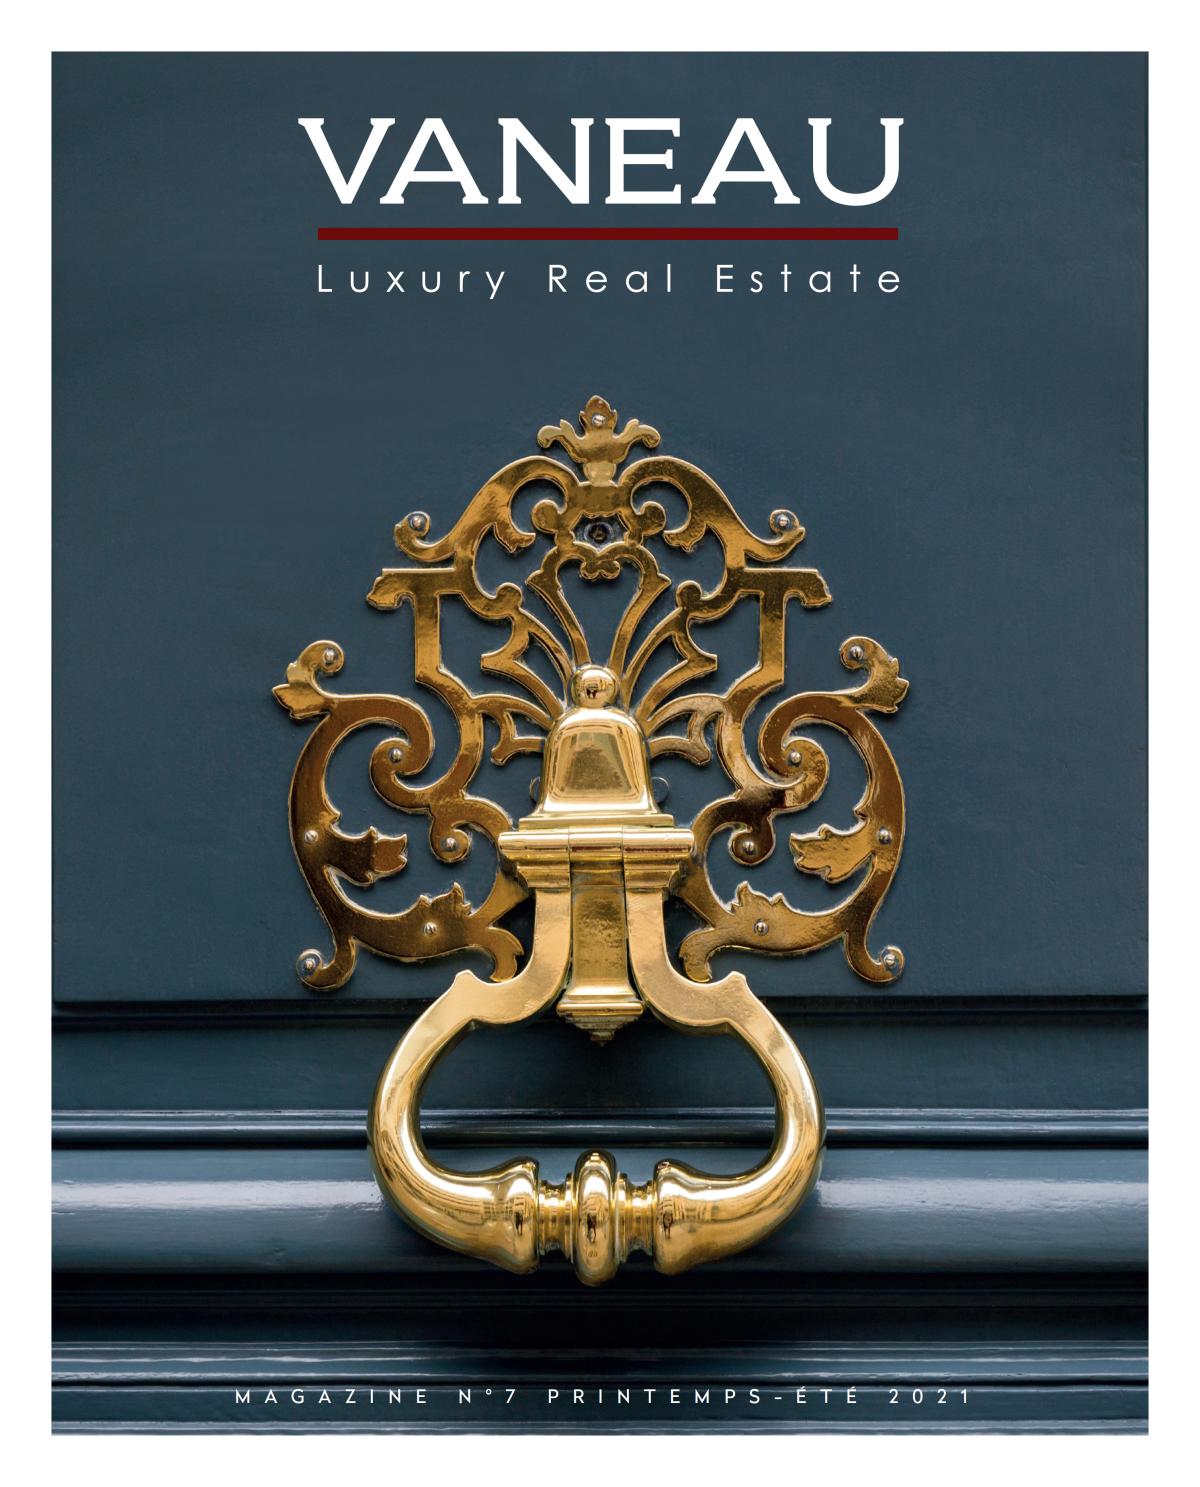 Vaneau magazine